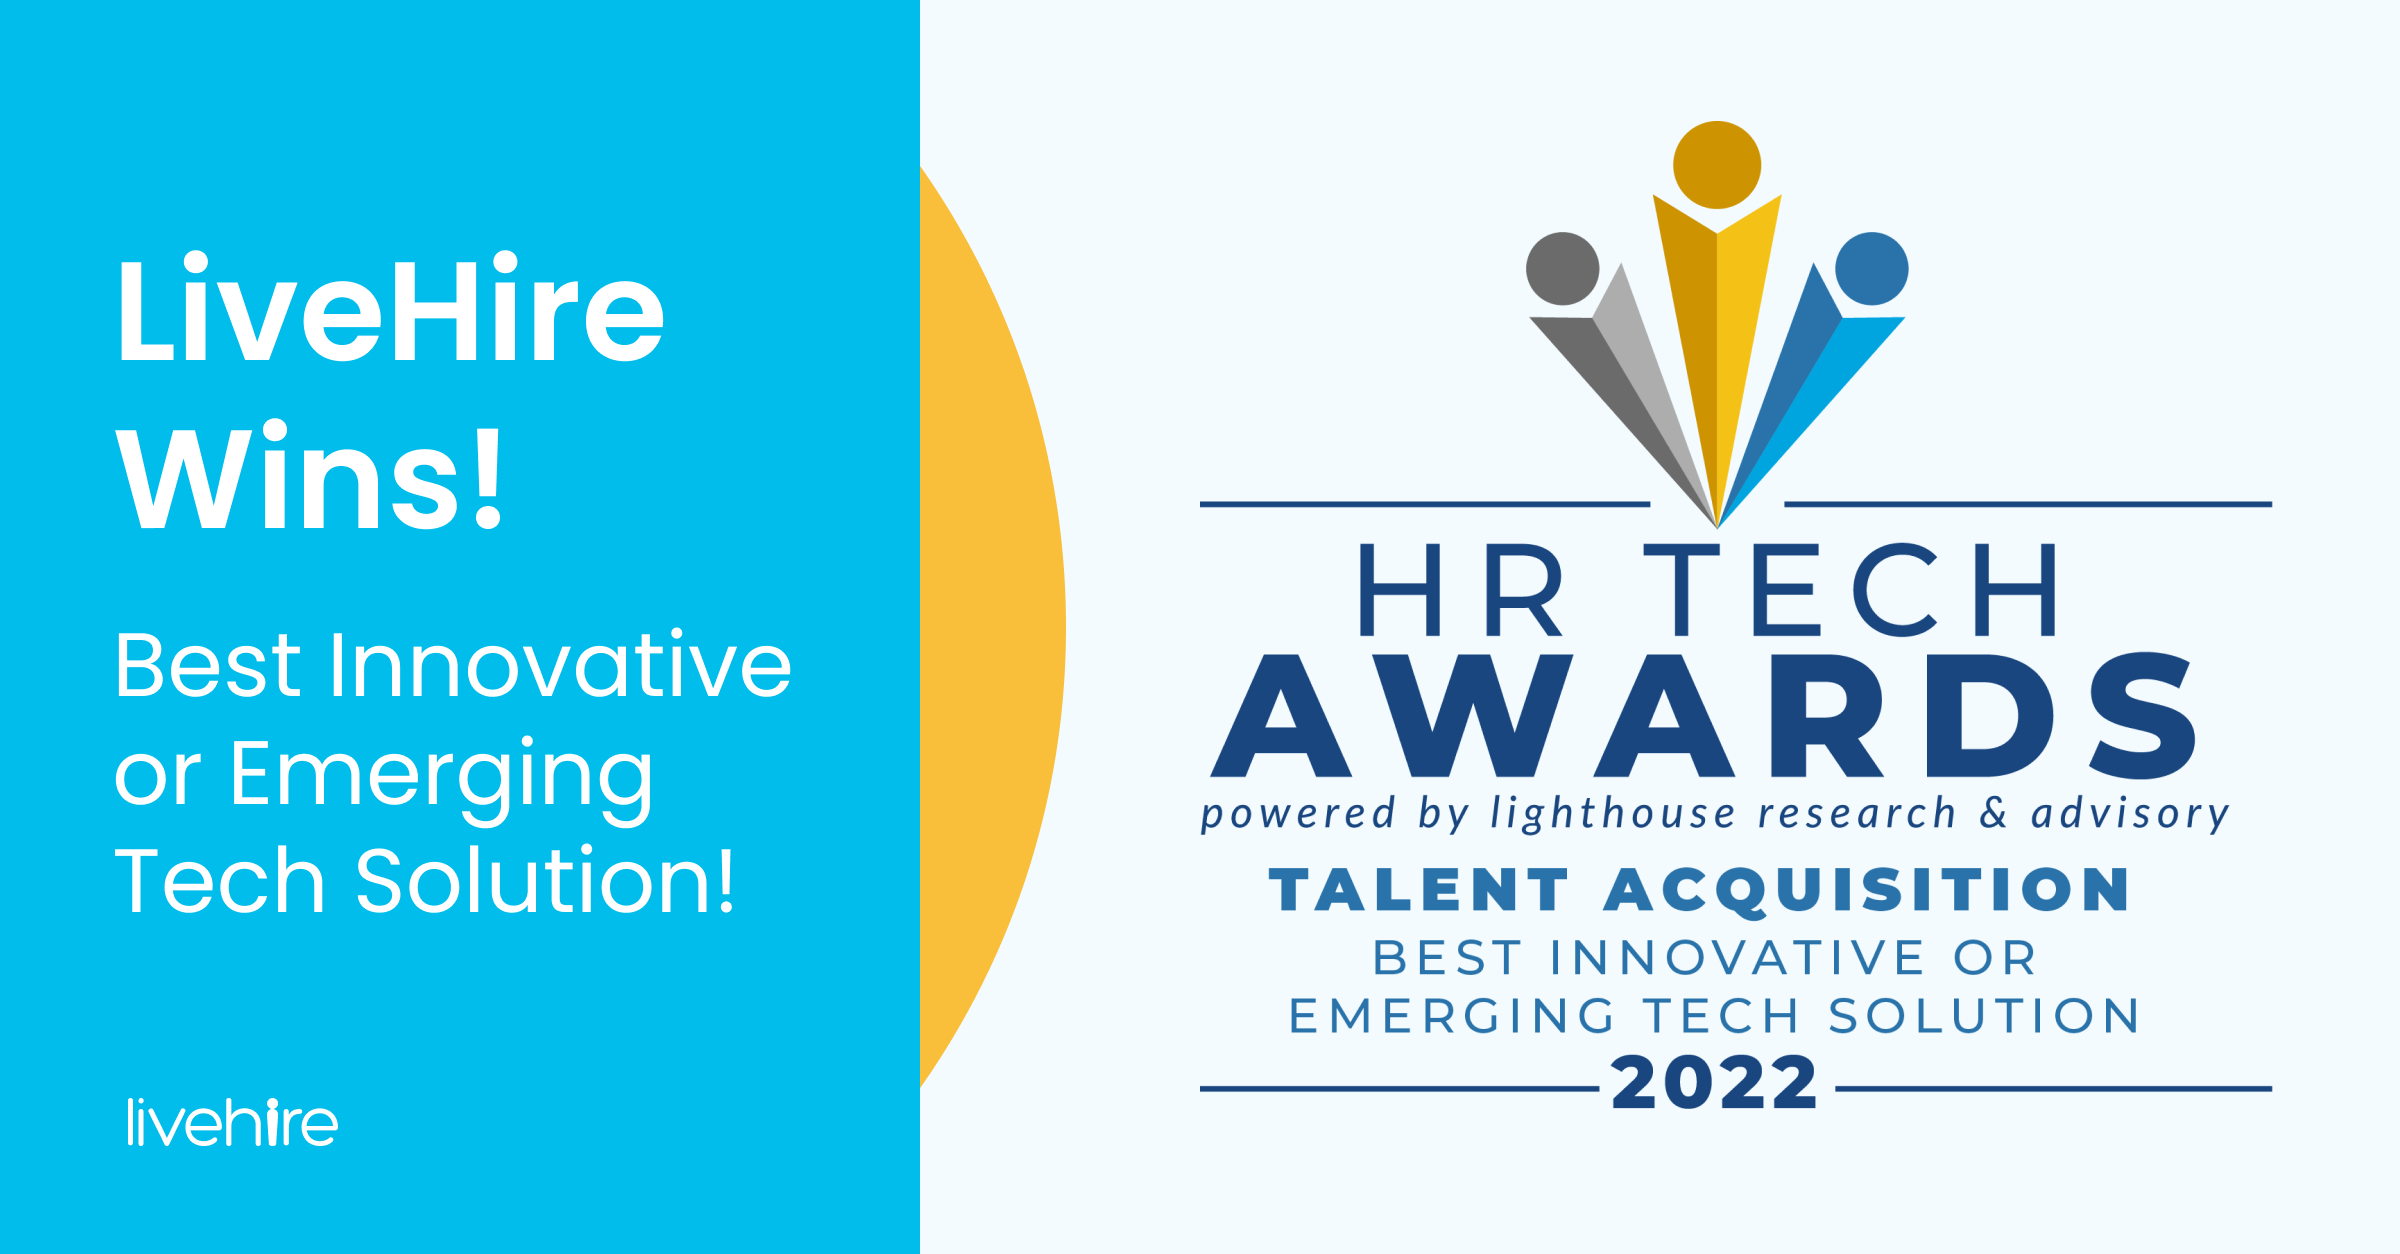 LiveHire wins HR Tech Award for “Best Innovative or Emerging Tech Solution”